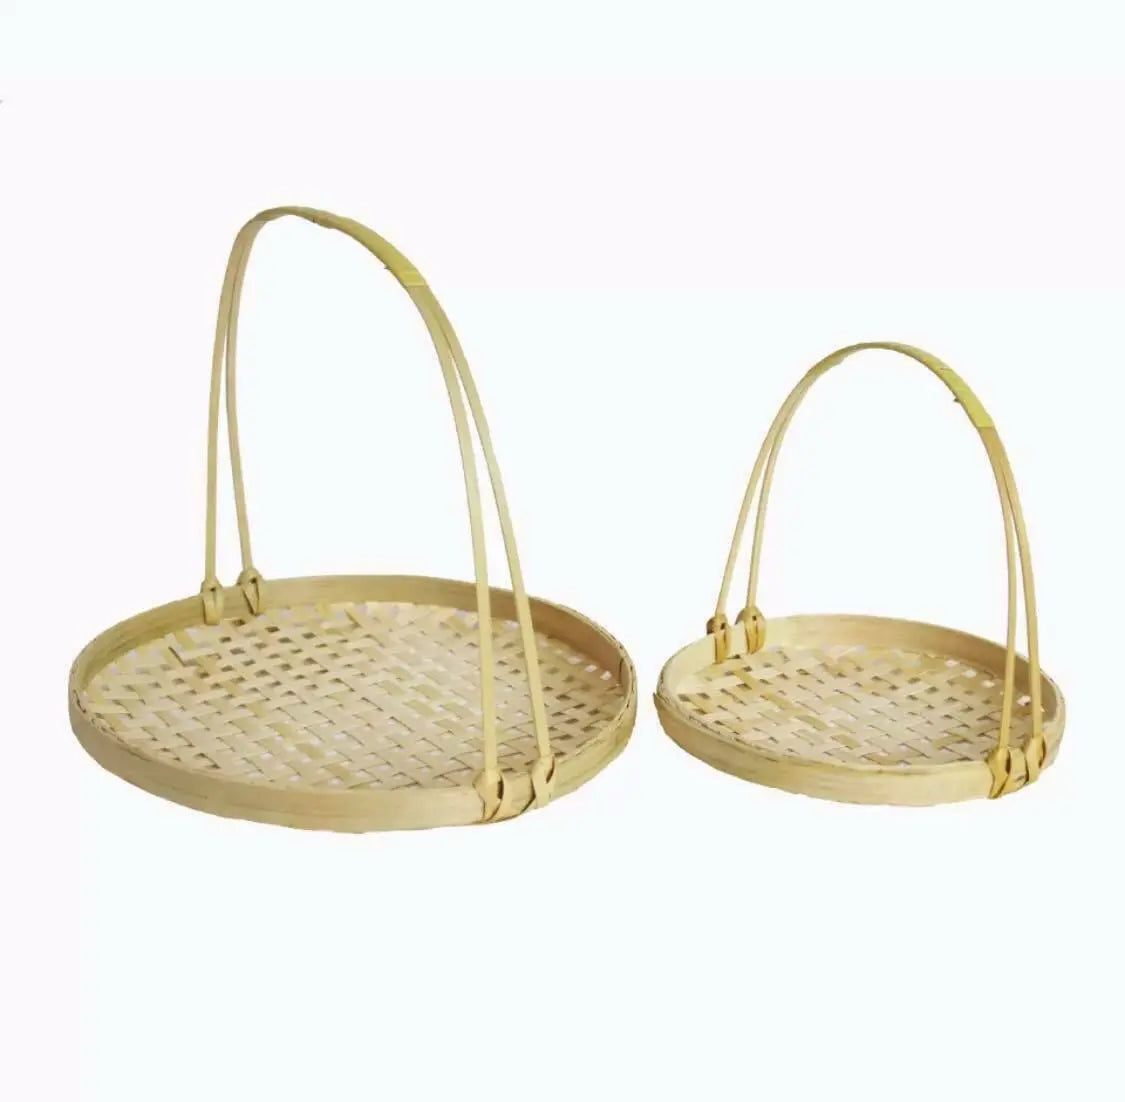 Bamboo Basket Handwoven Handmade Storage Plate Basket With Handle everythingbamboo